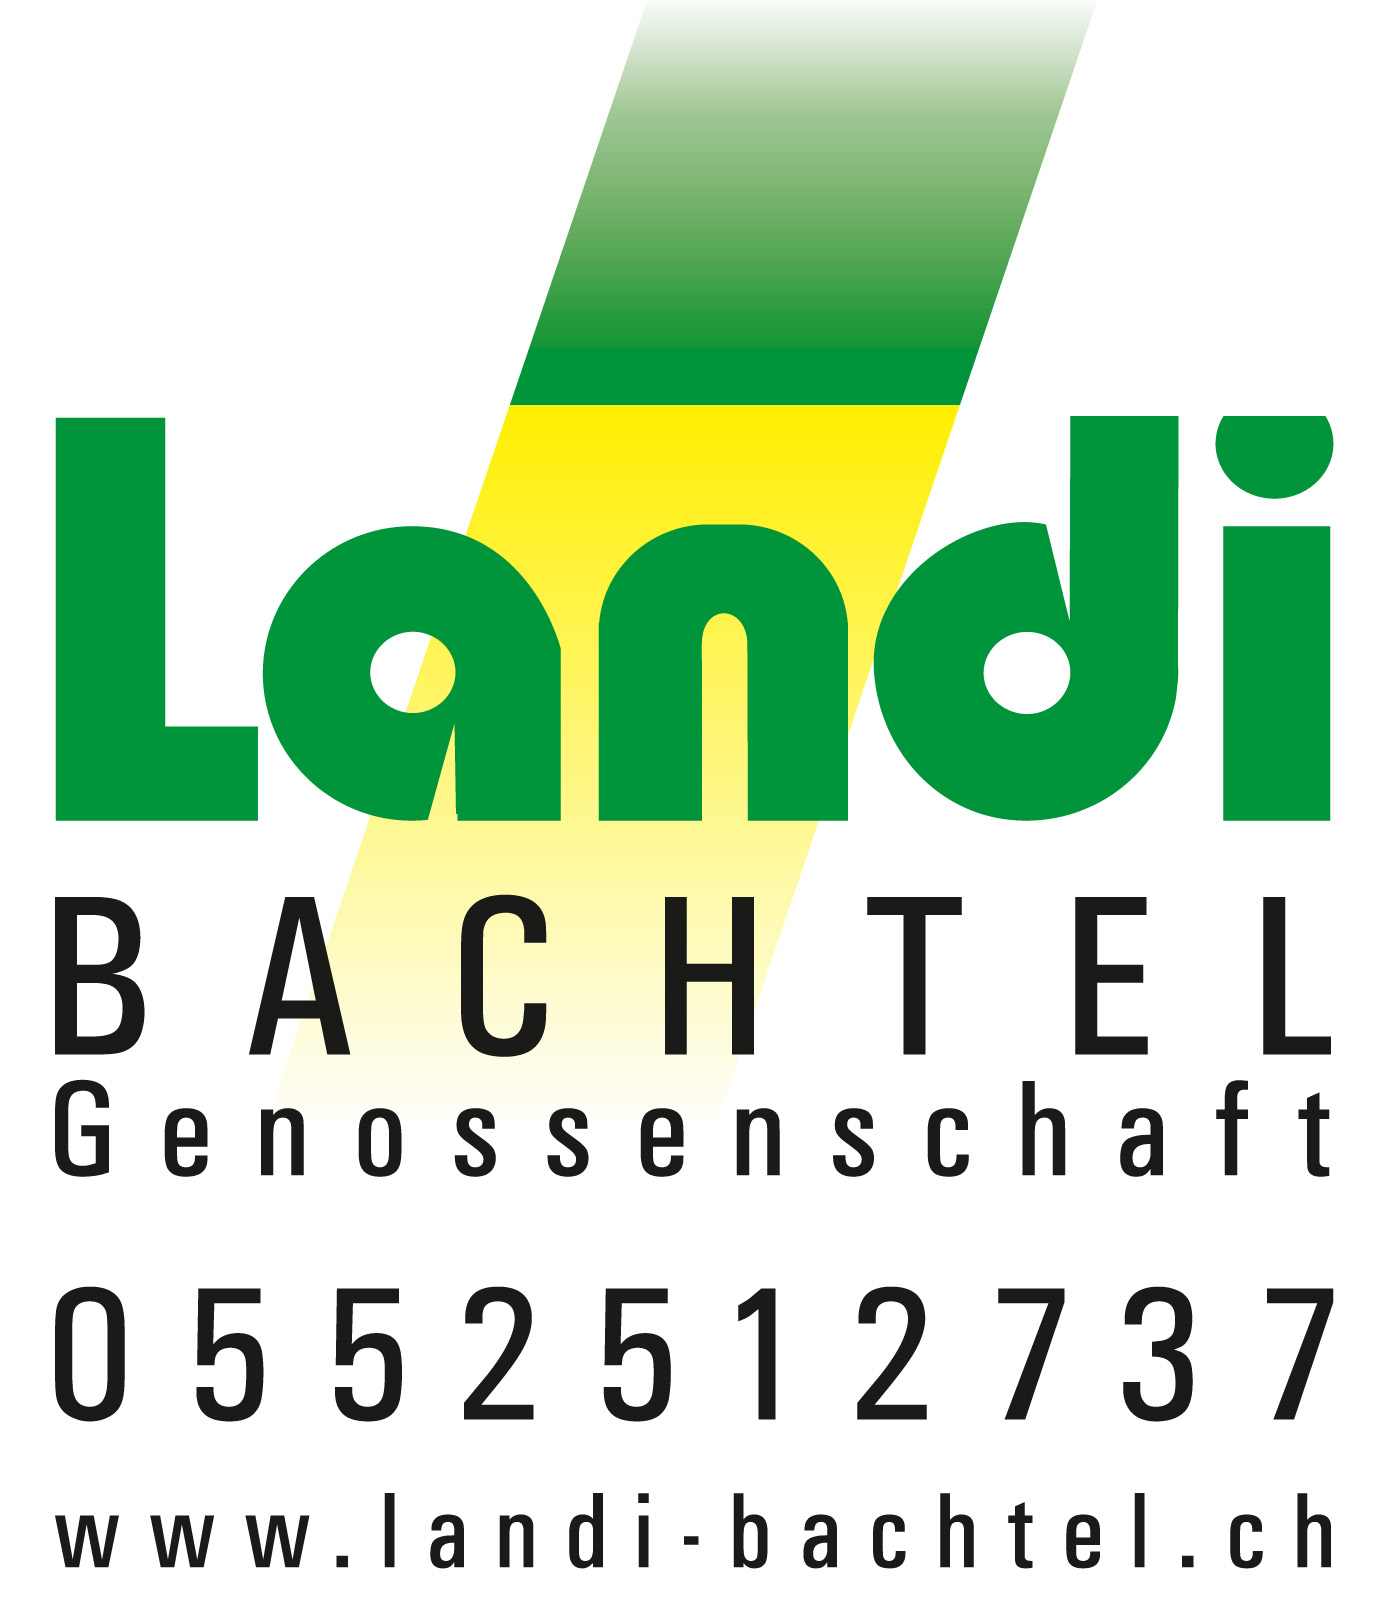 Landi Bachtel Genossenschaft